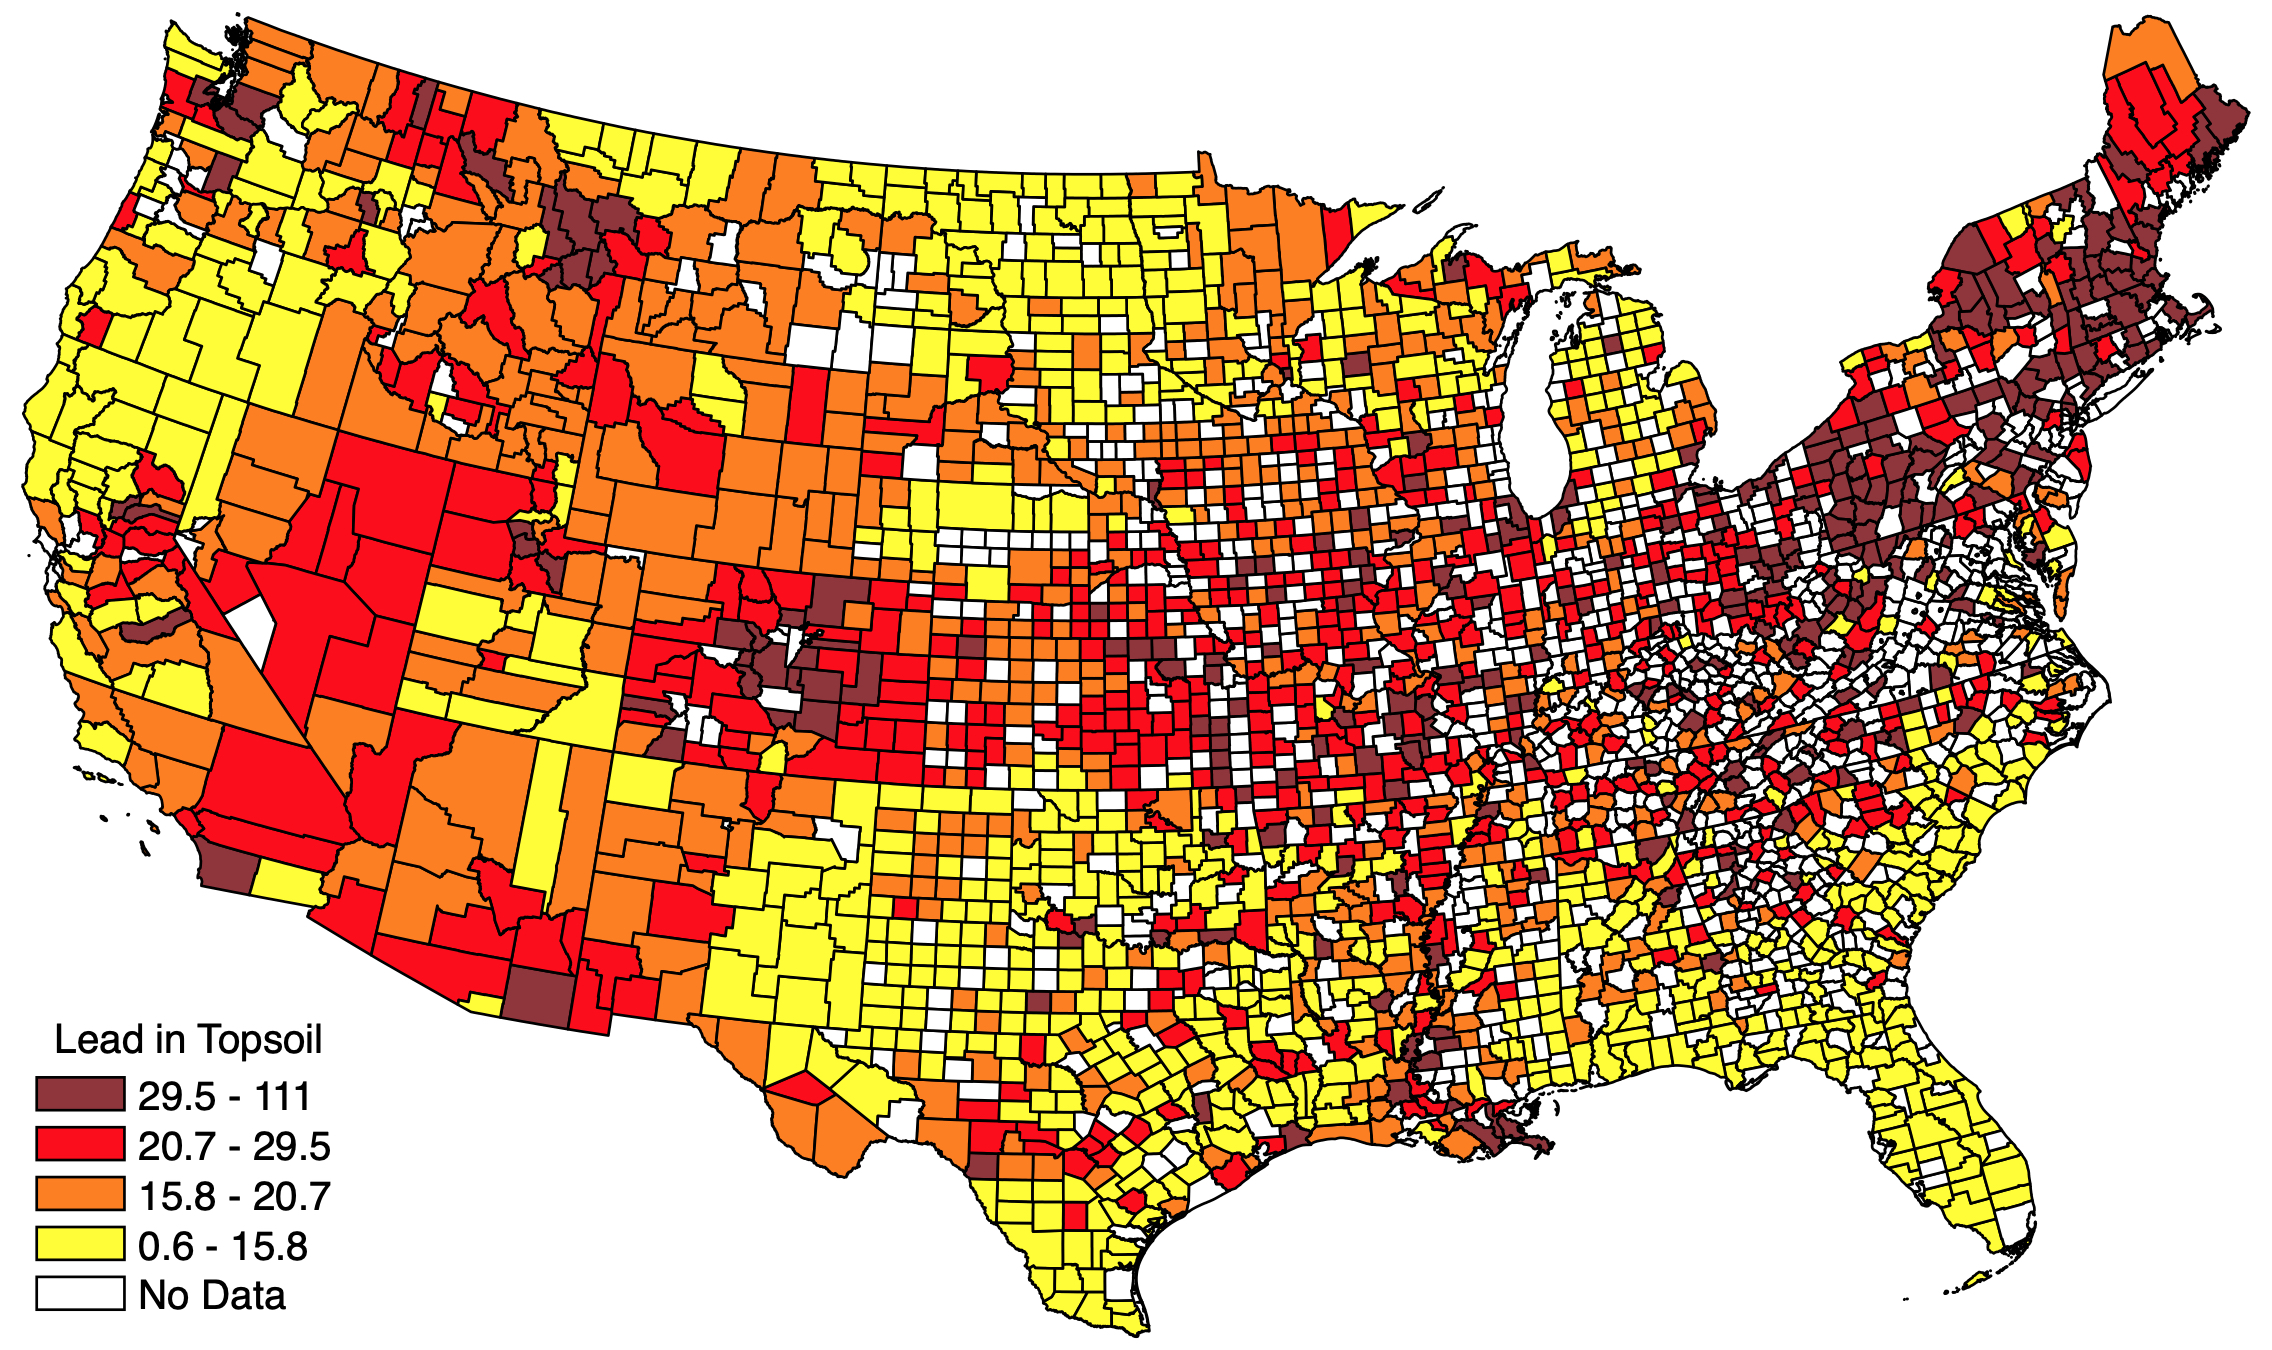 Image of a map showing lead in soil across U.S.